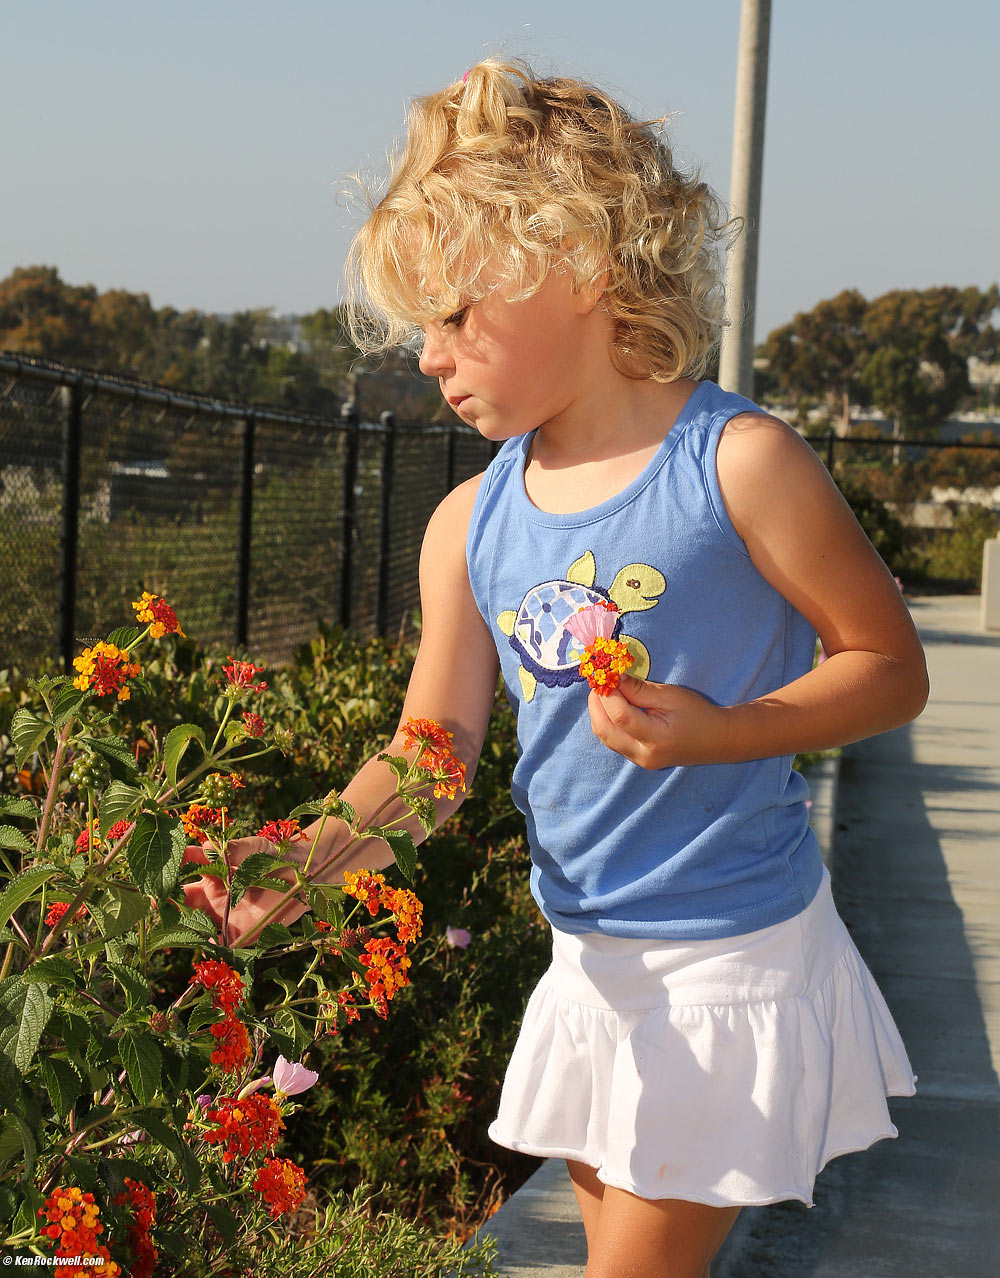 Katie picking flowers